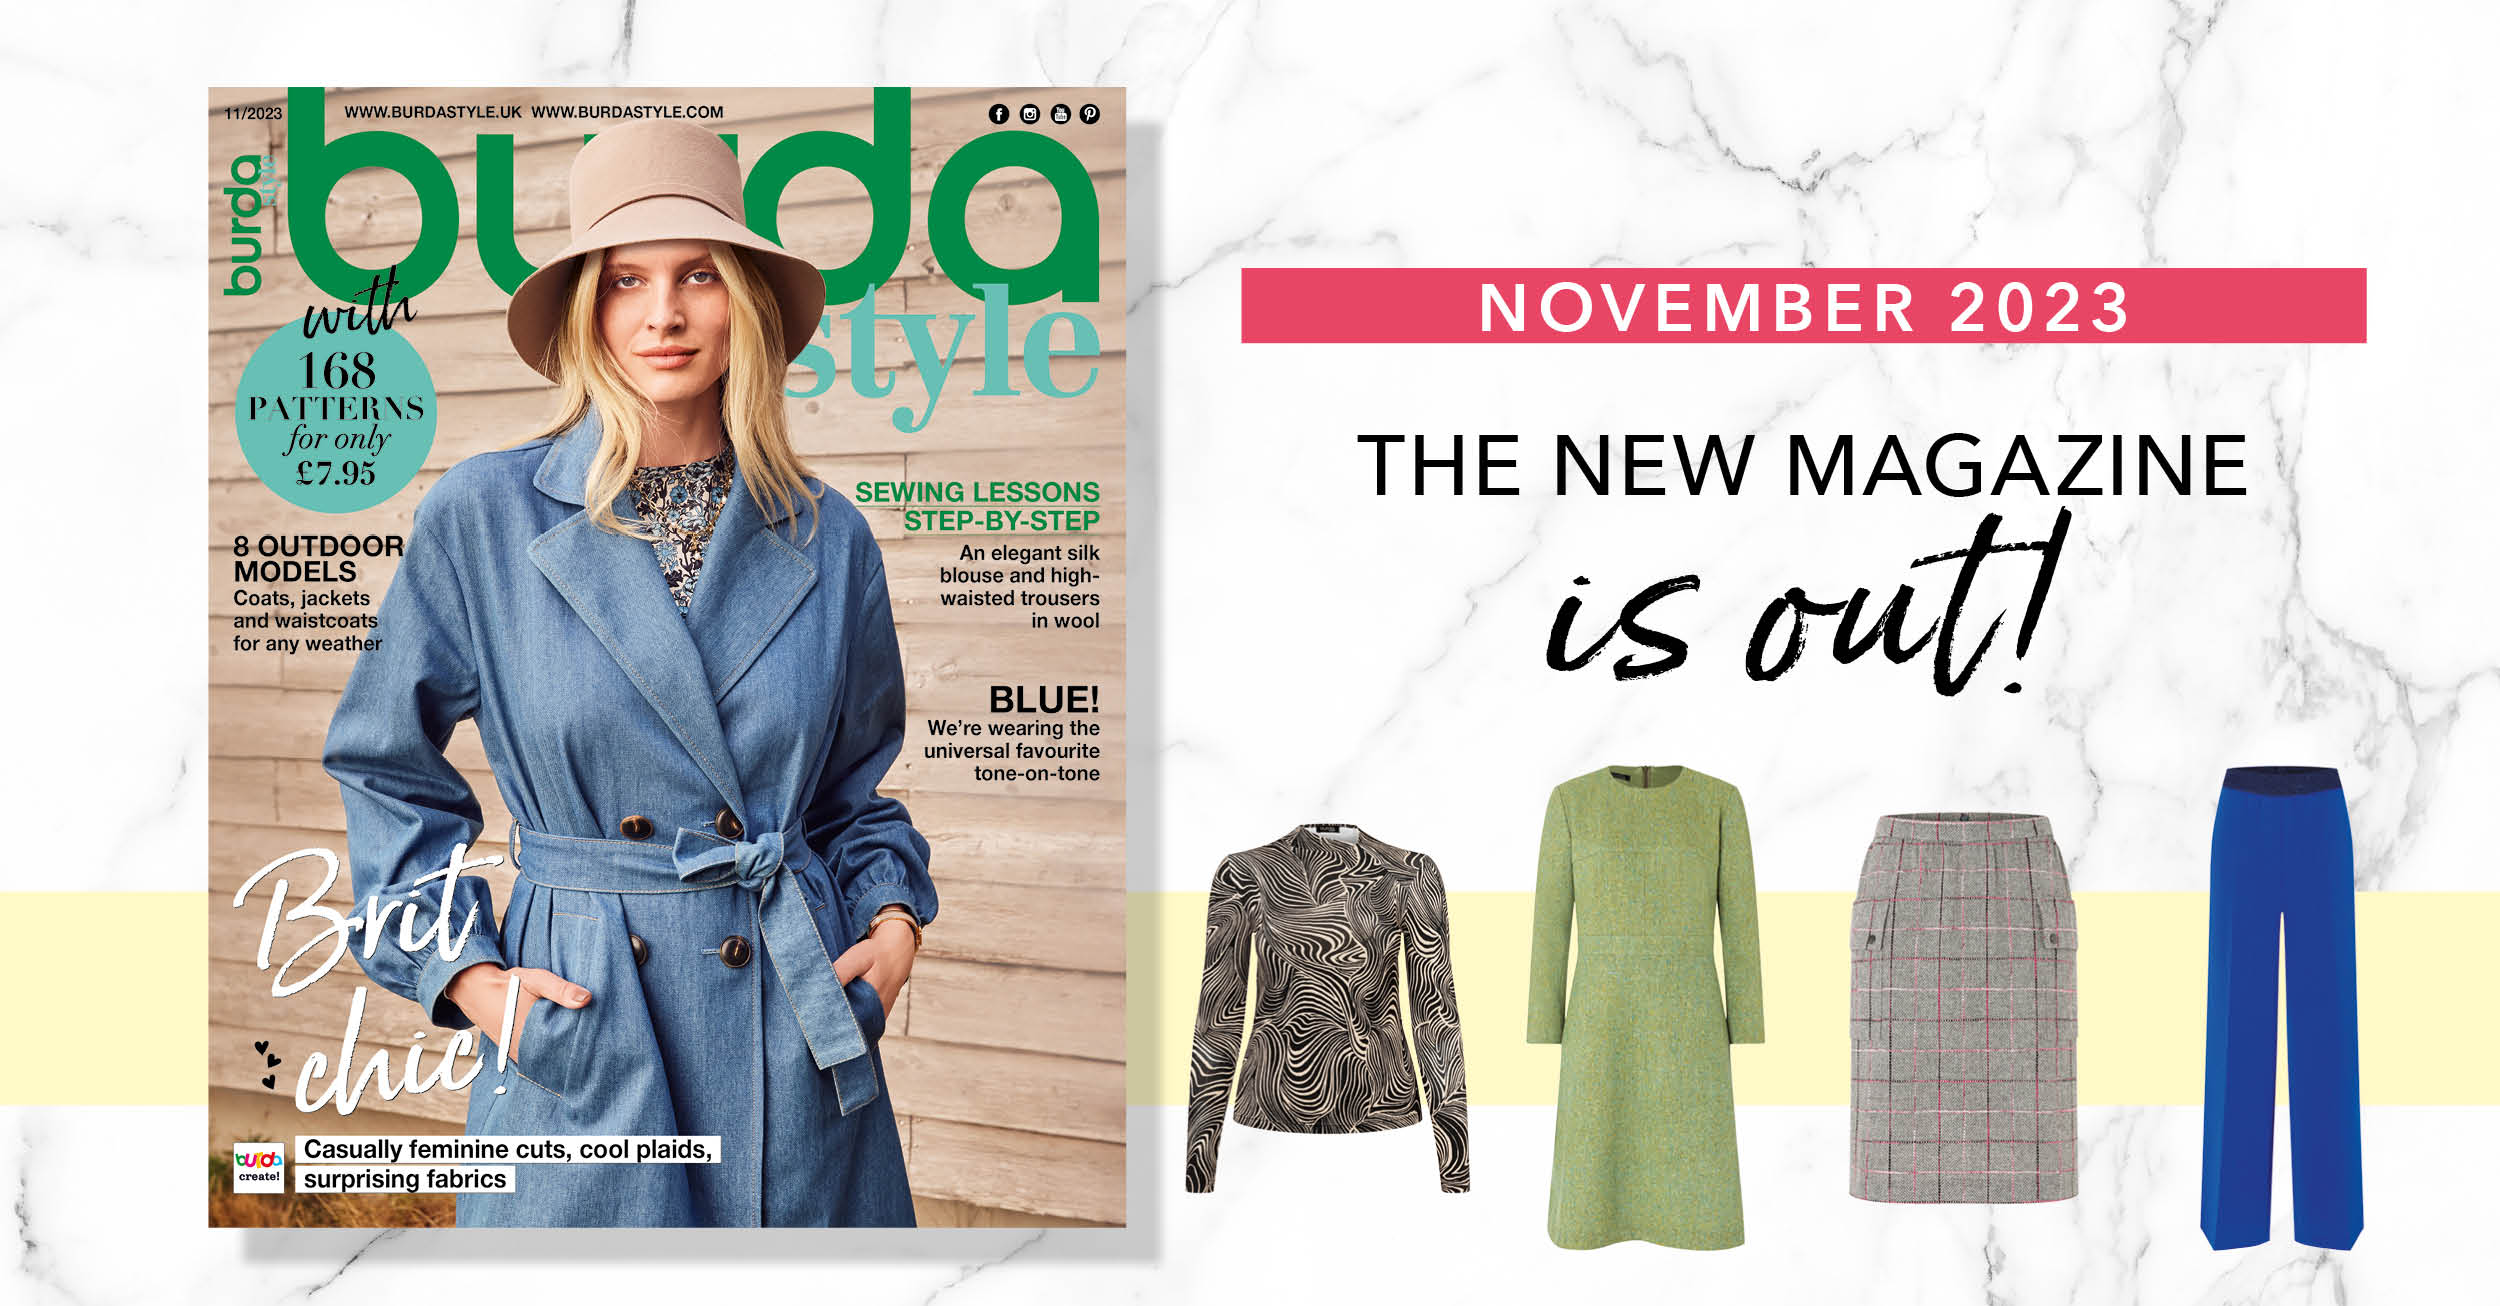 November 2023: The New Issue of Burda Style!